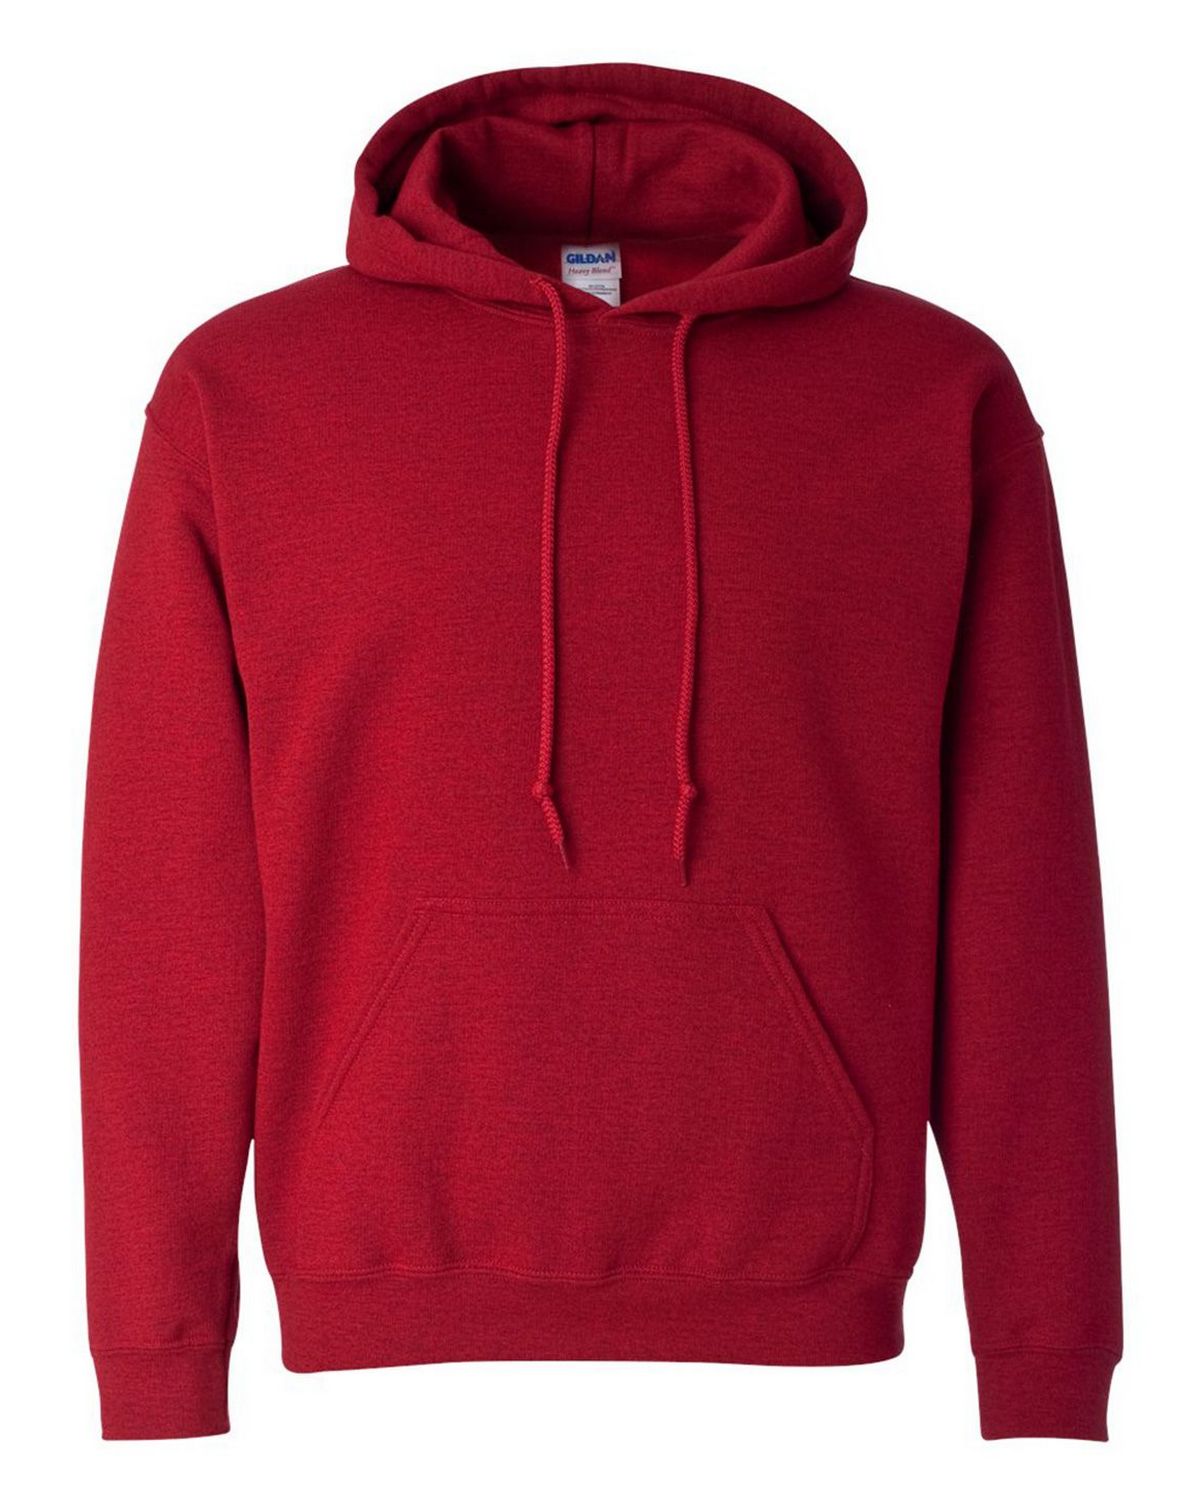 Gildan 18500 Hooded Sweatshirt - Shop at ApparelnBags.com